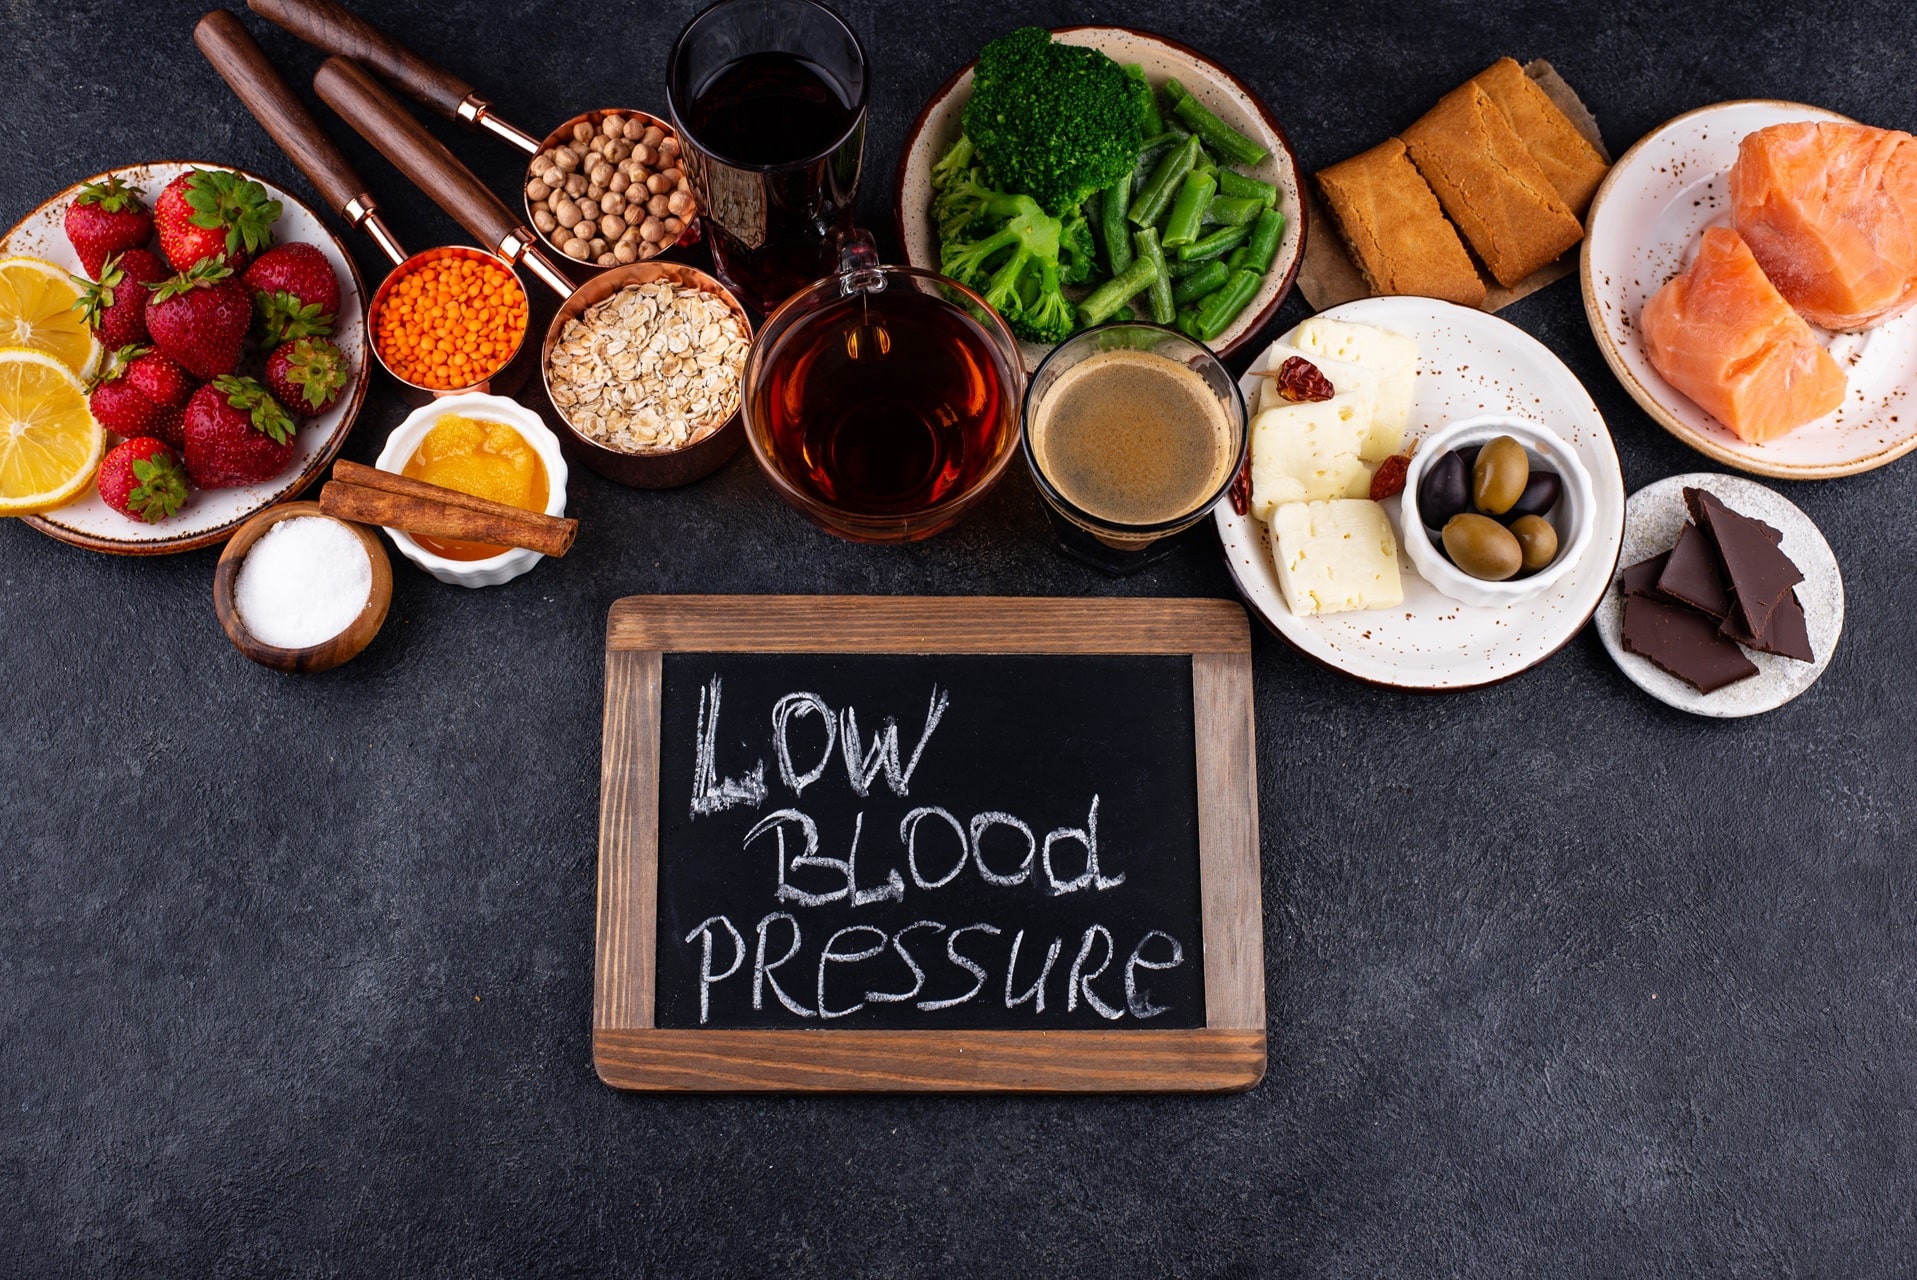 Foods that lower blood pressure